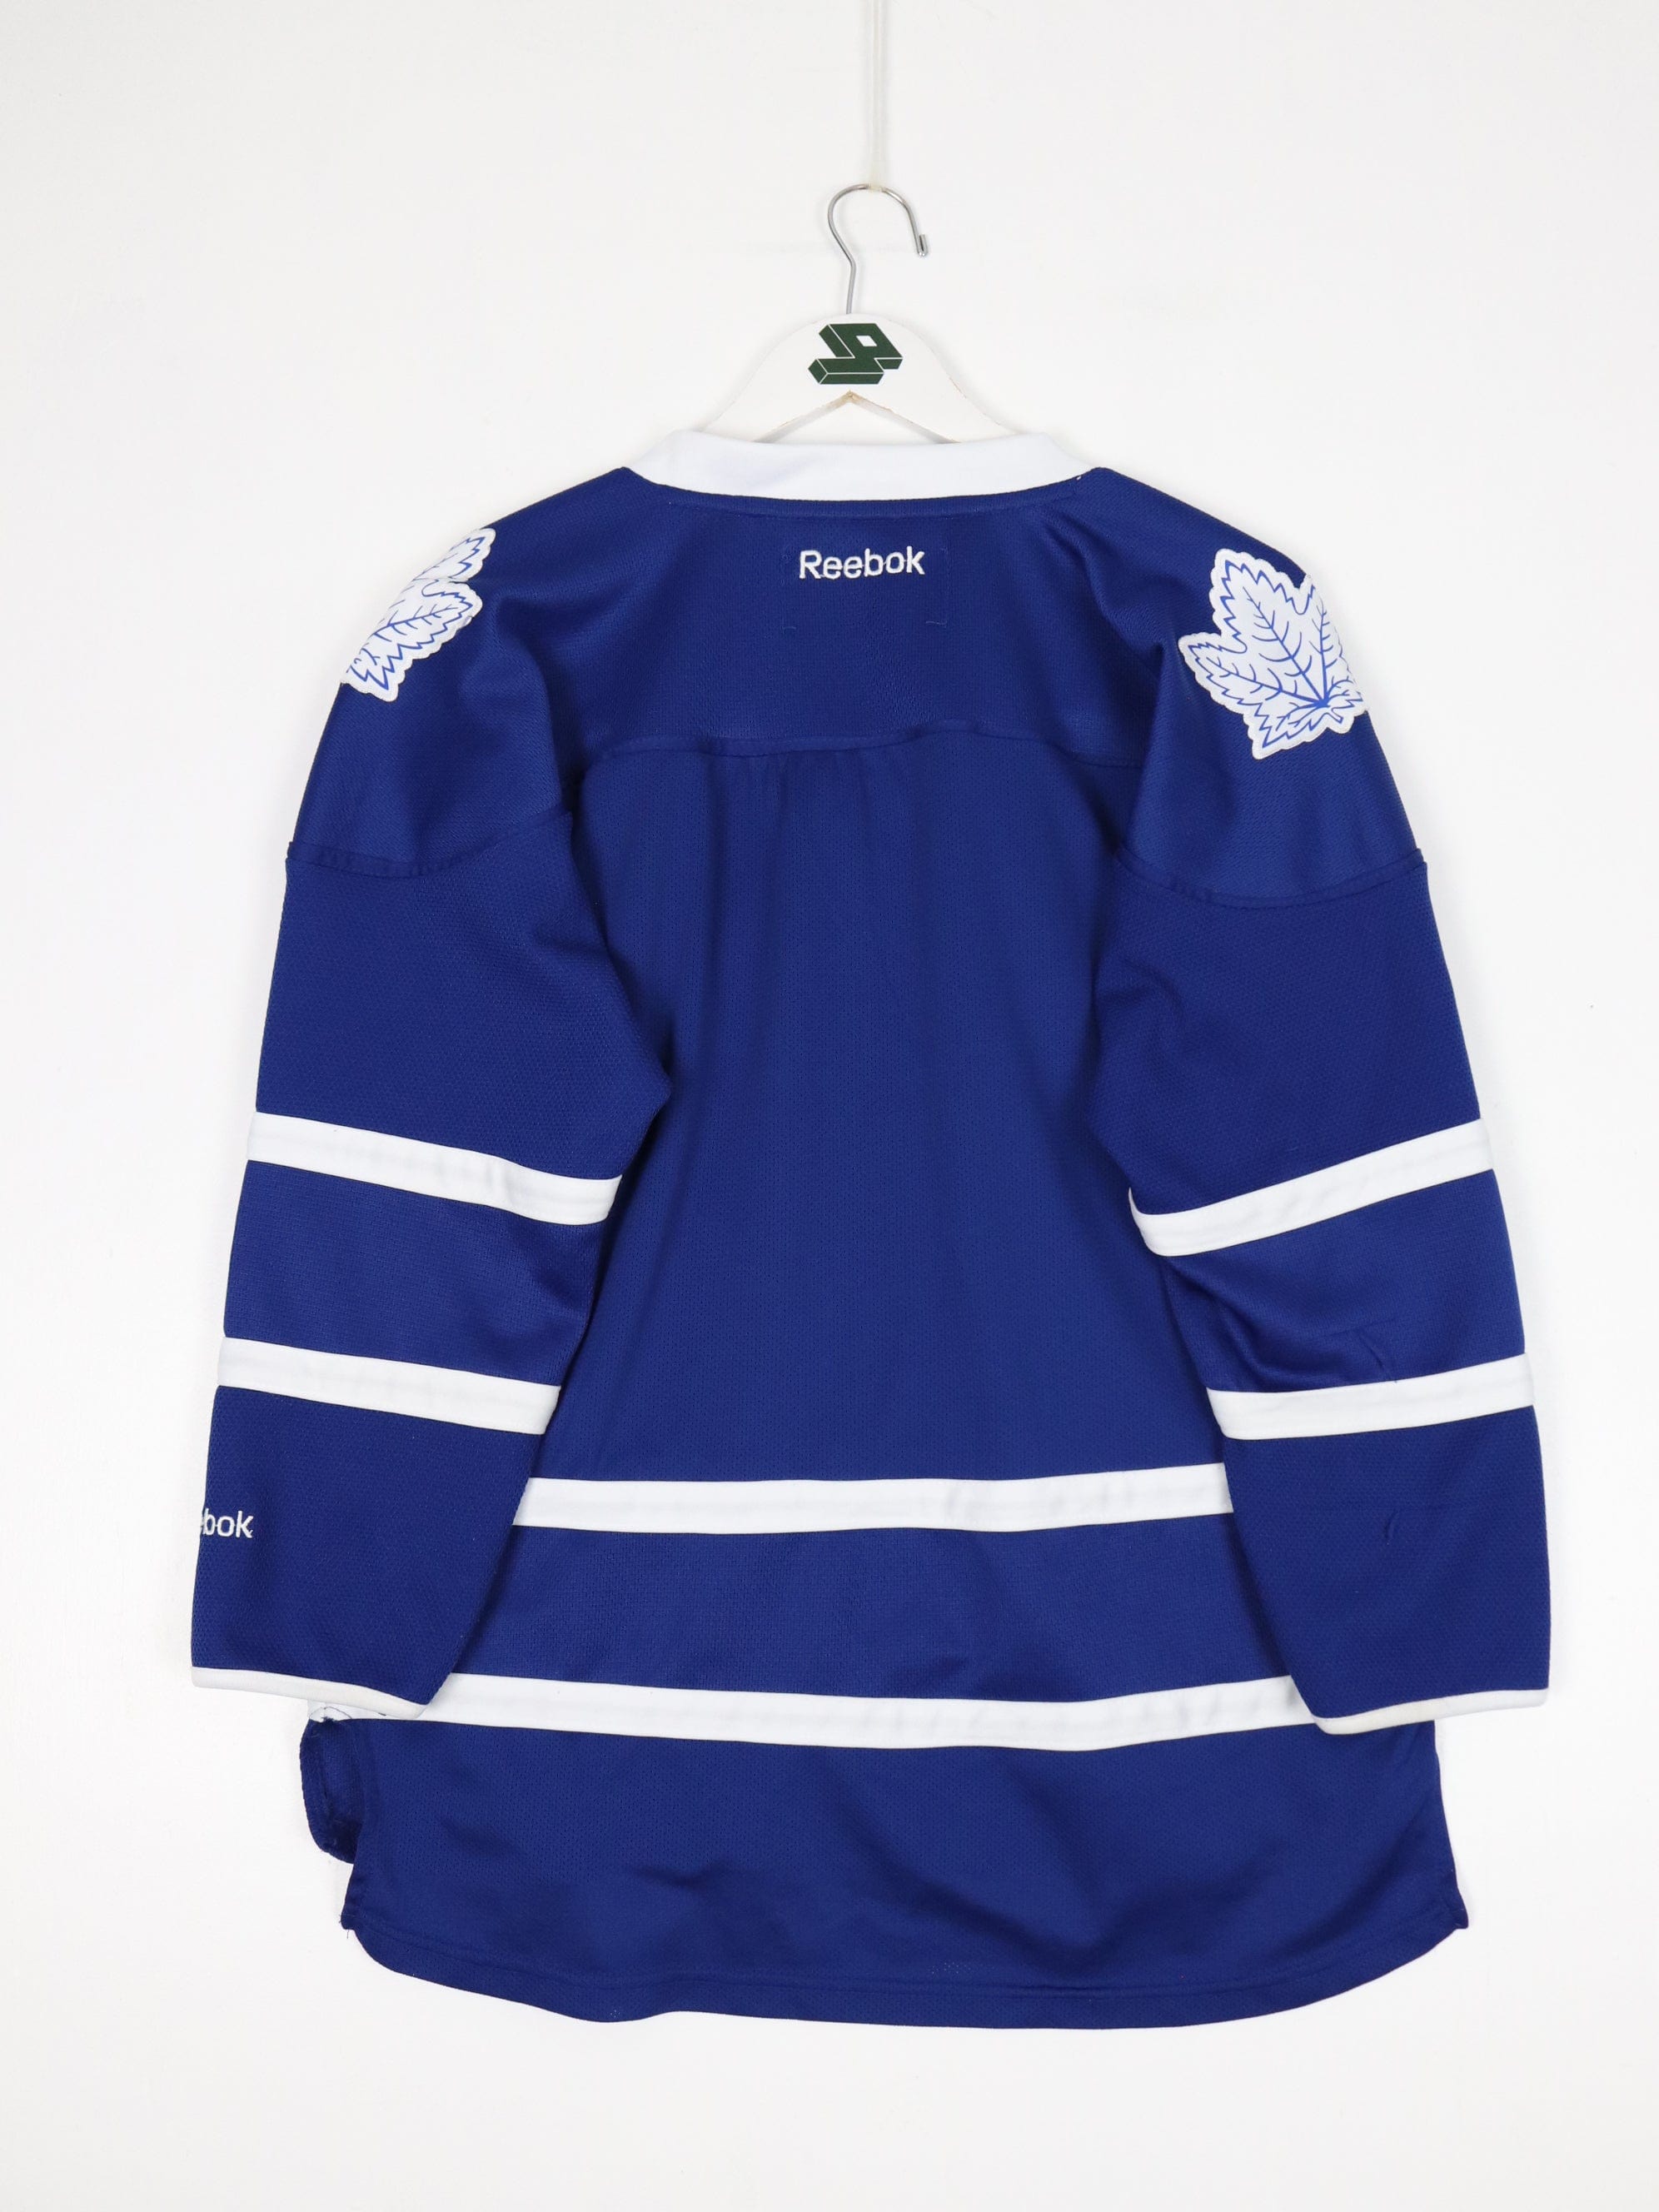 Reebok, Shirts, Toronto Maple Leafs Jersey Blank